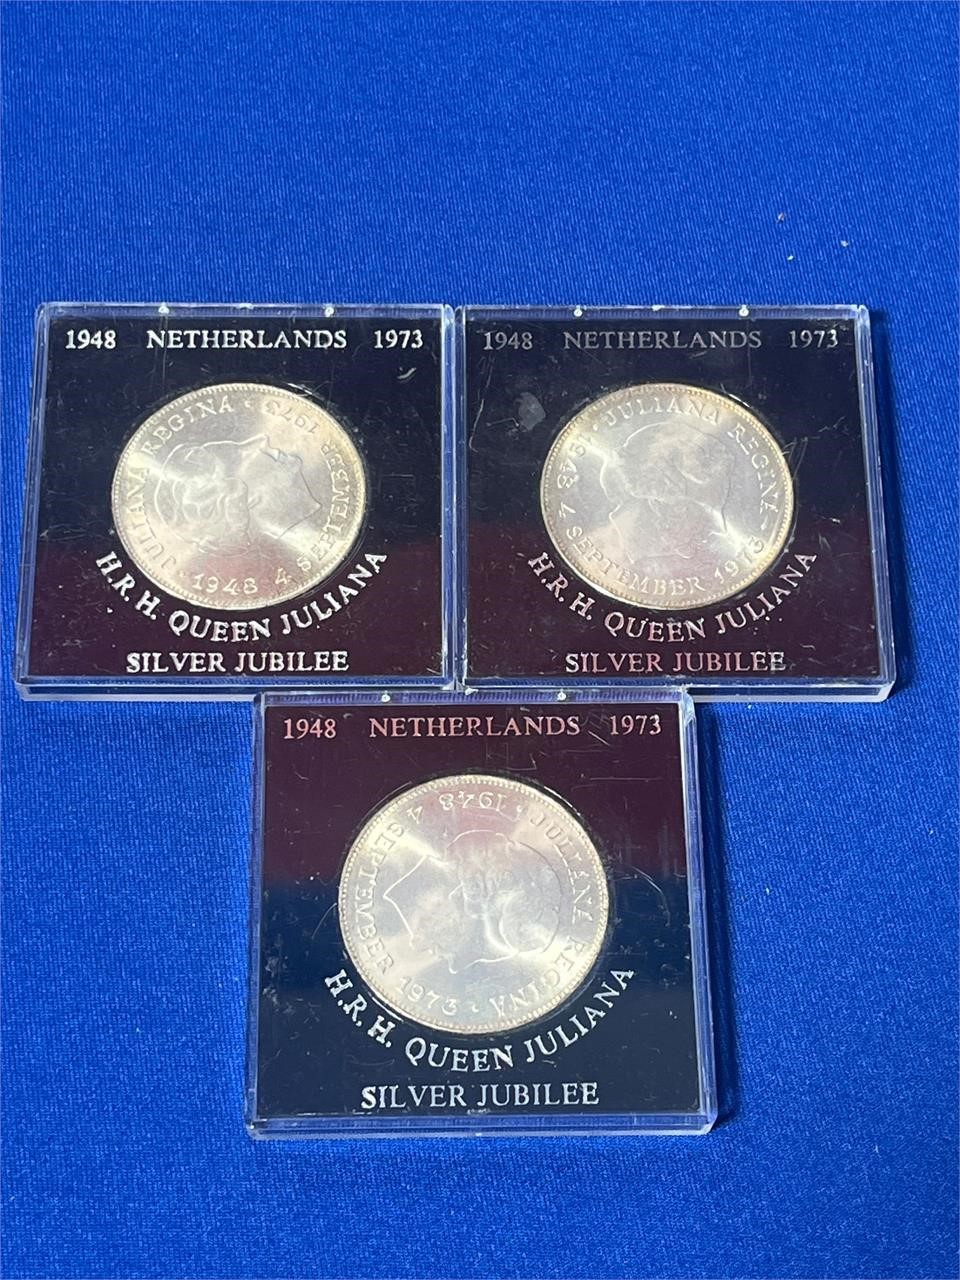 (3) Queen Juliana Silver Jubilee Coins